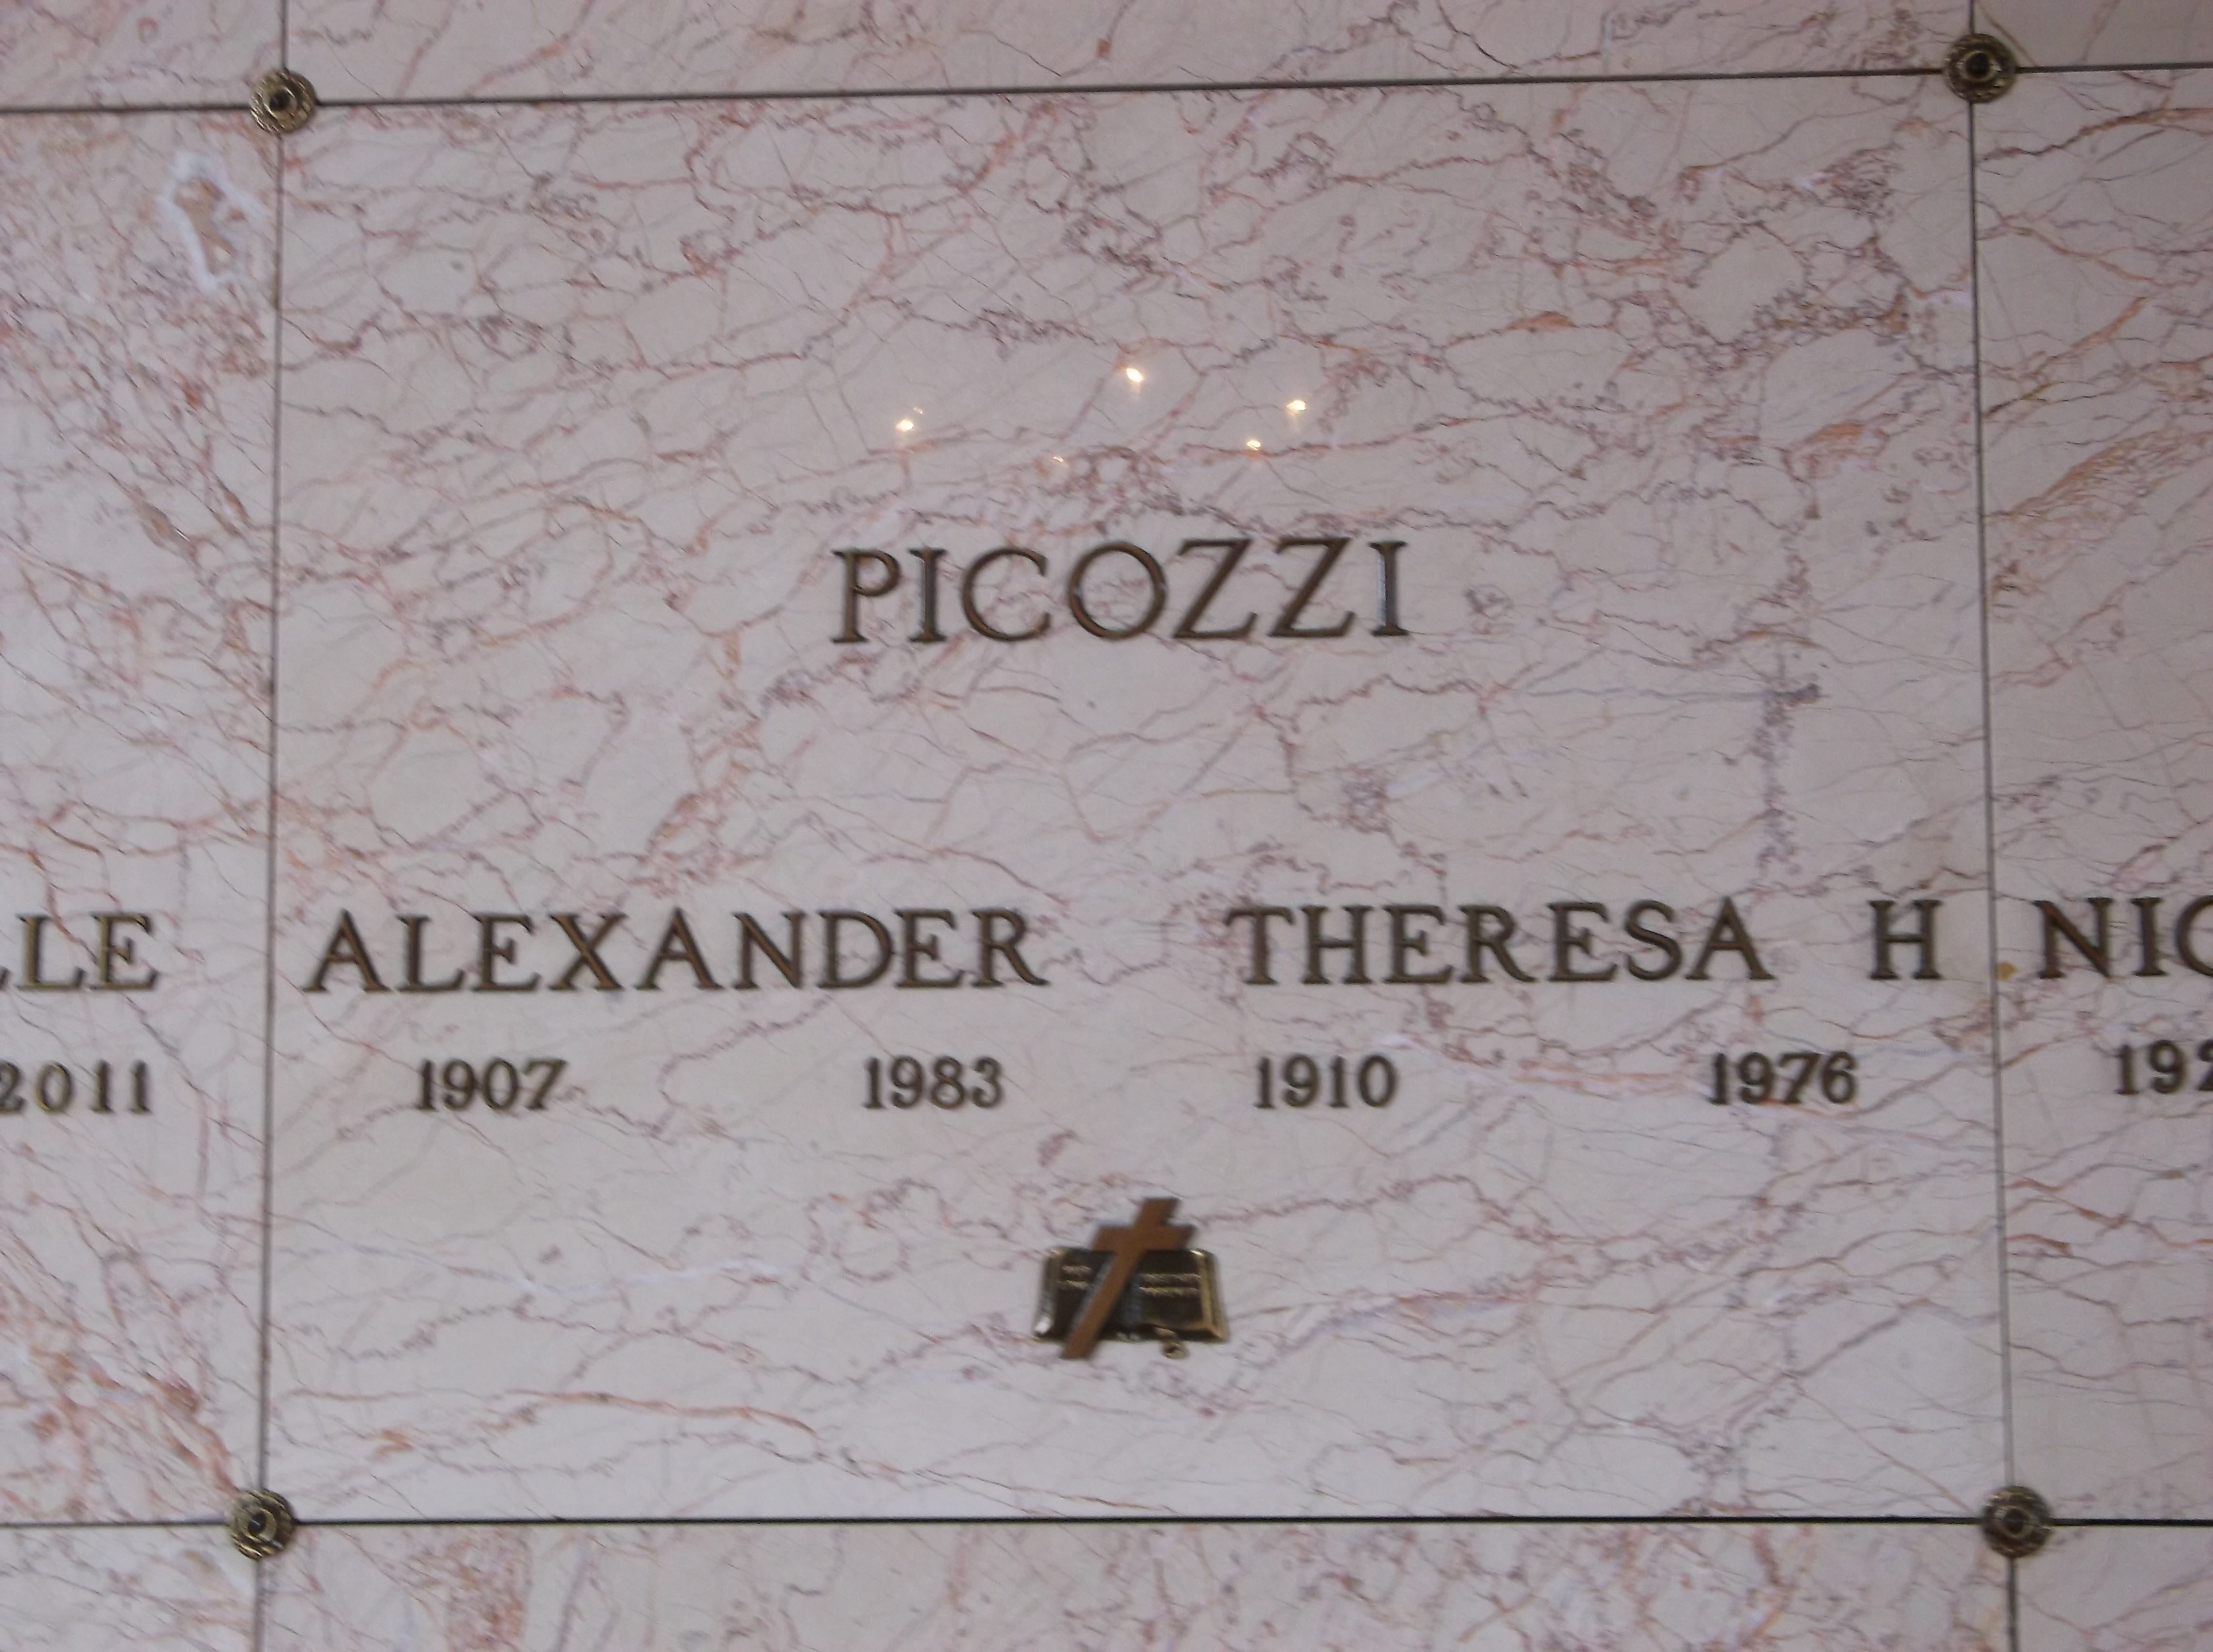 Alexander Picozzi